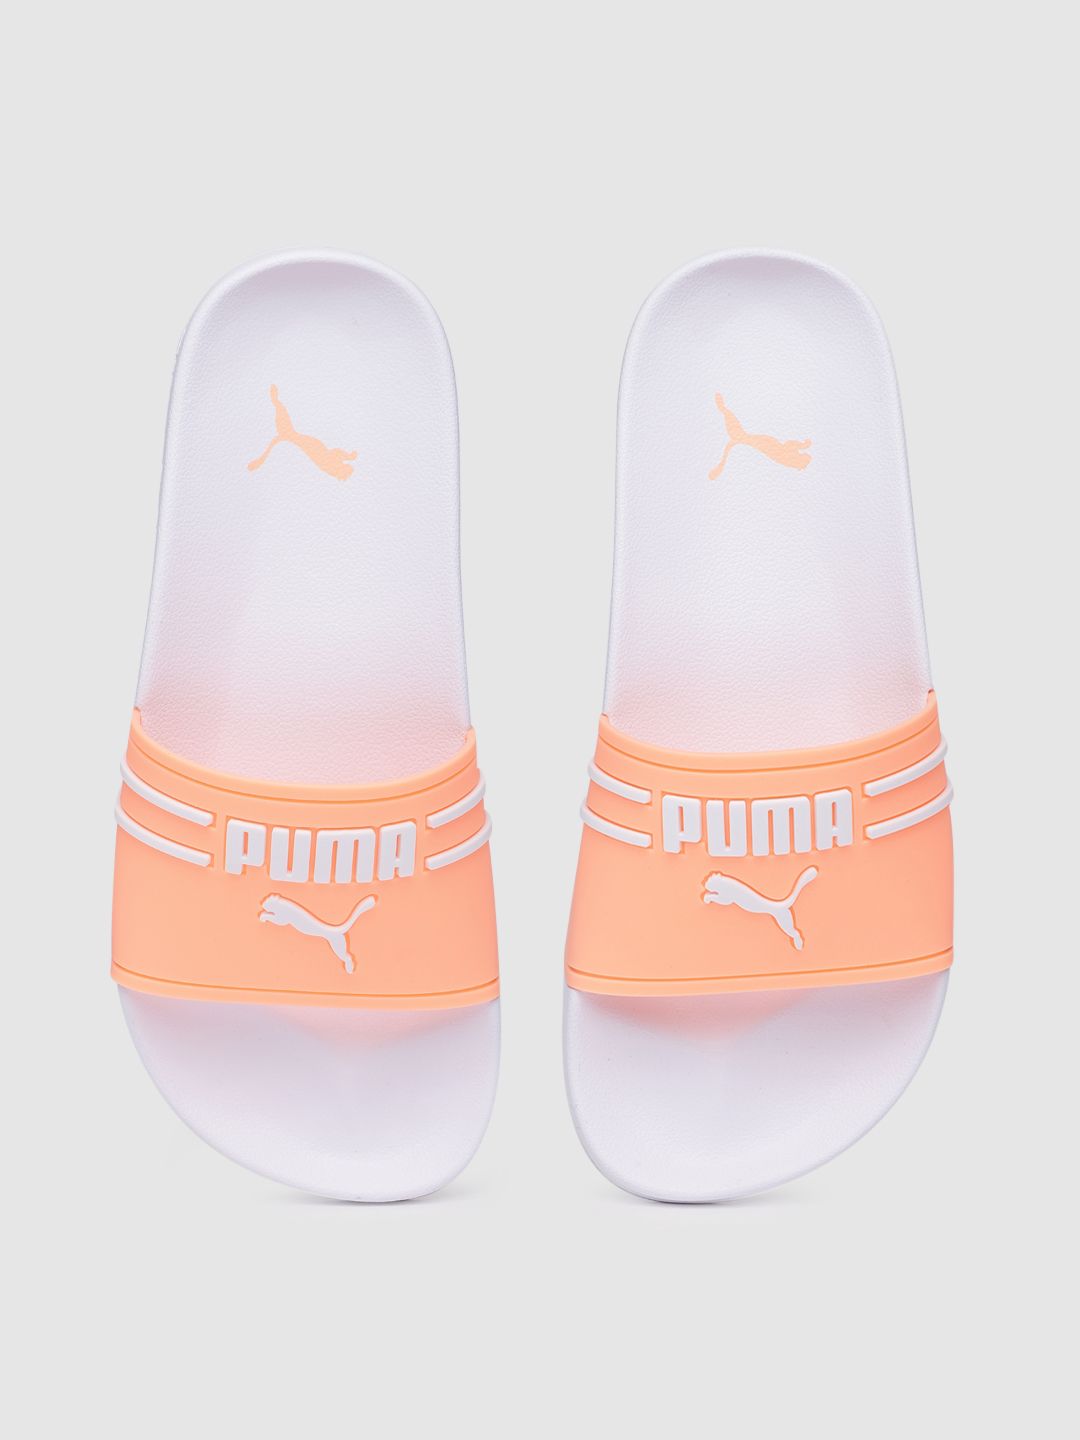 Puma Unisex Fizzy Peach Orange & White Brand Logo Applique Leadcat 2.0 Neon Sliders Price in India